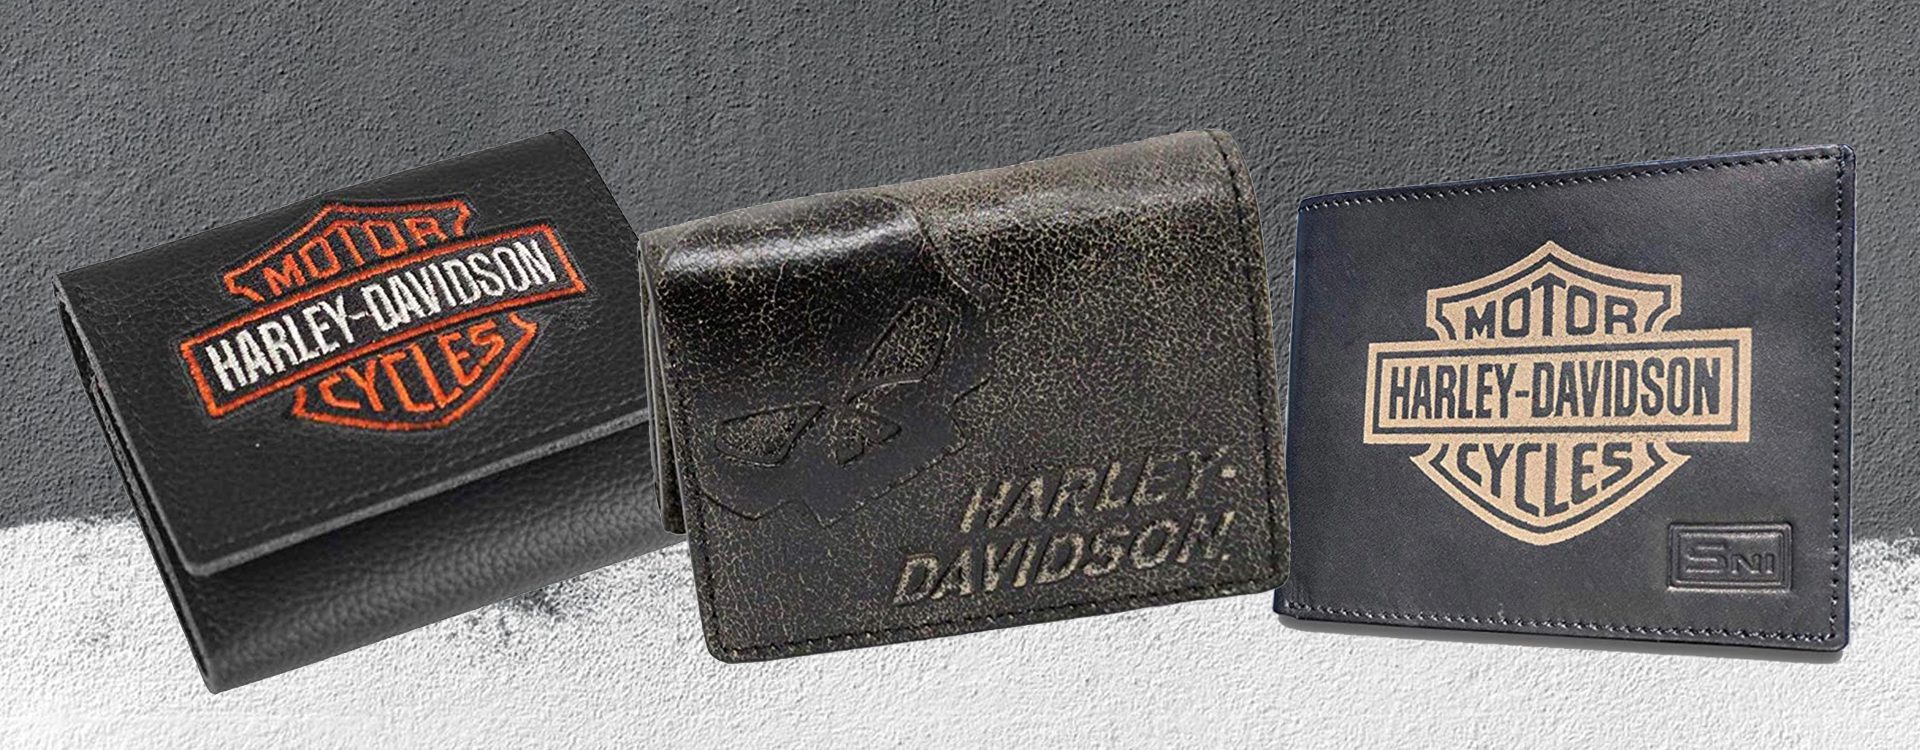 Best Chain Wallet: Harley-Davidson, Dickies, Vintage & Designer